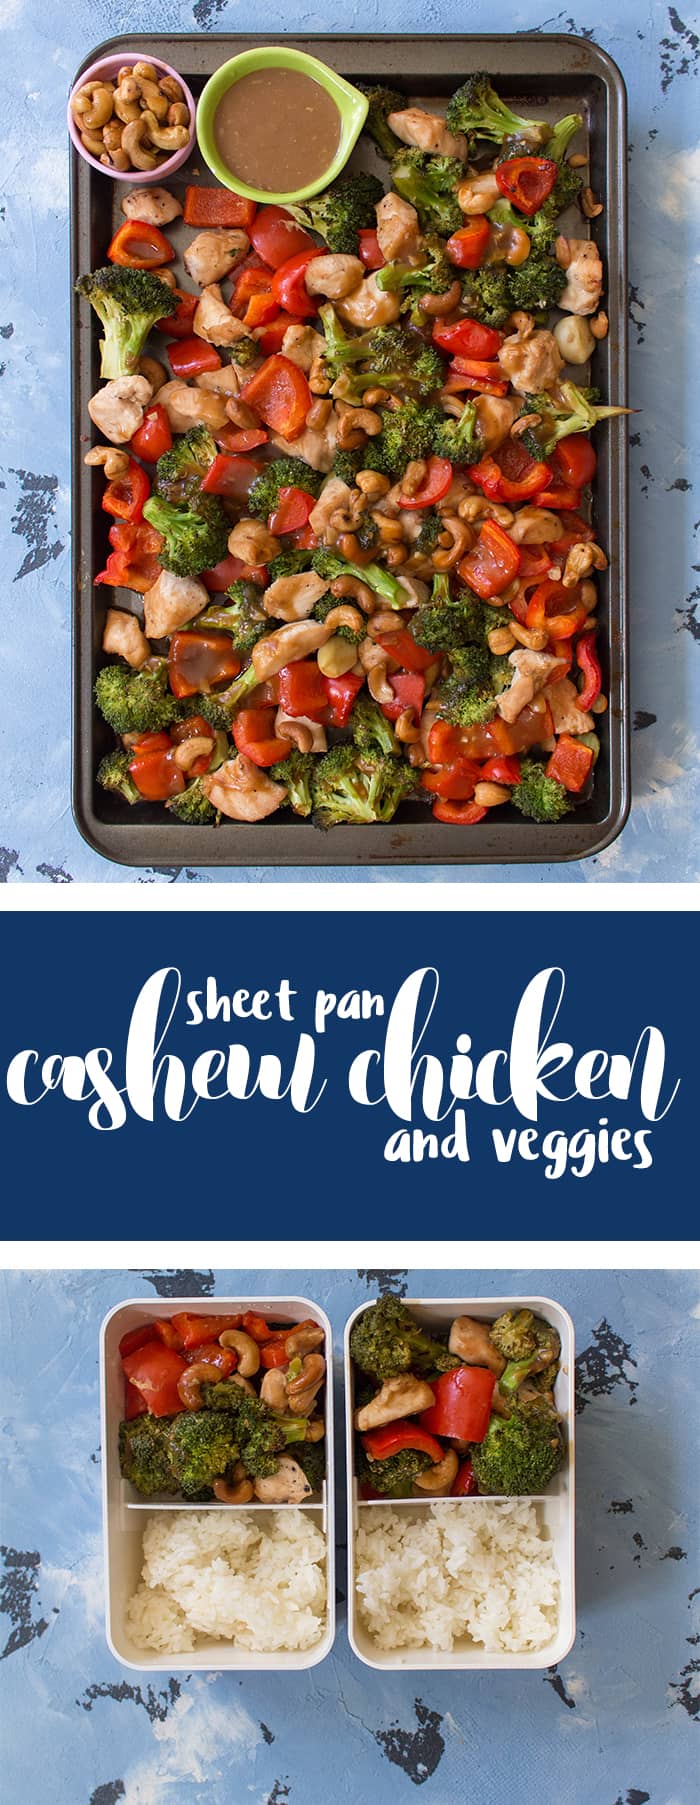 sheet pan cashew chicken with veggies (meal prep)